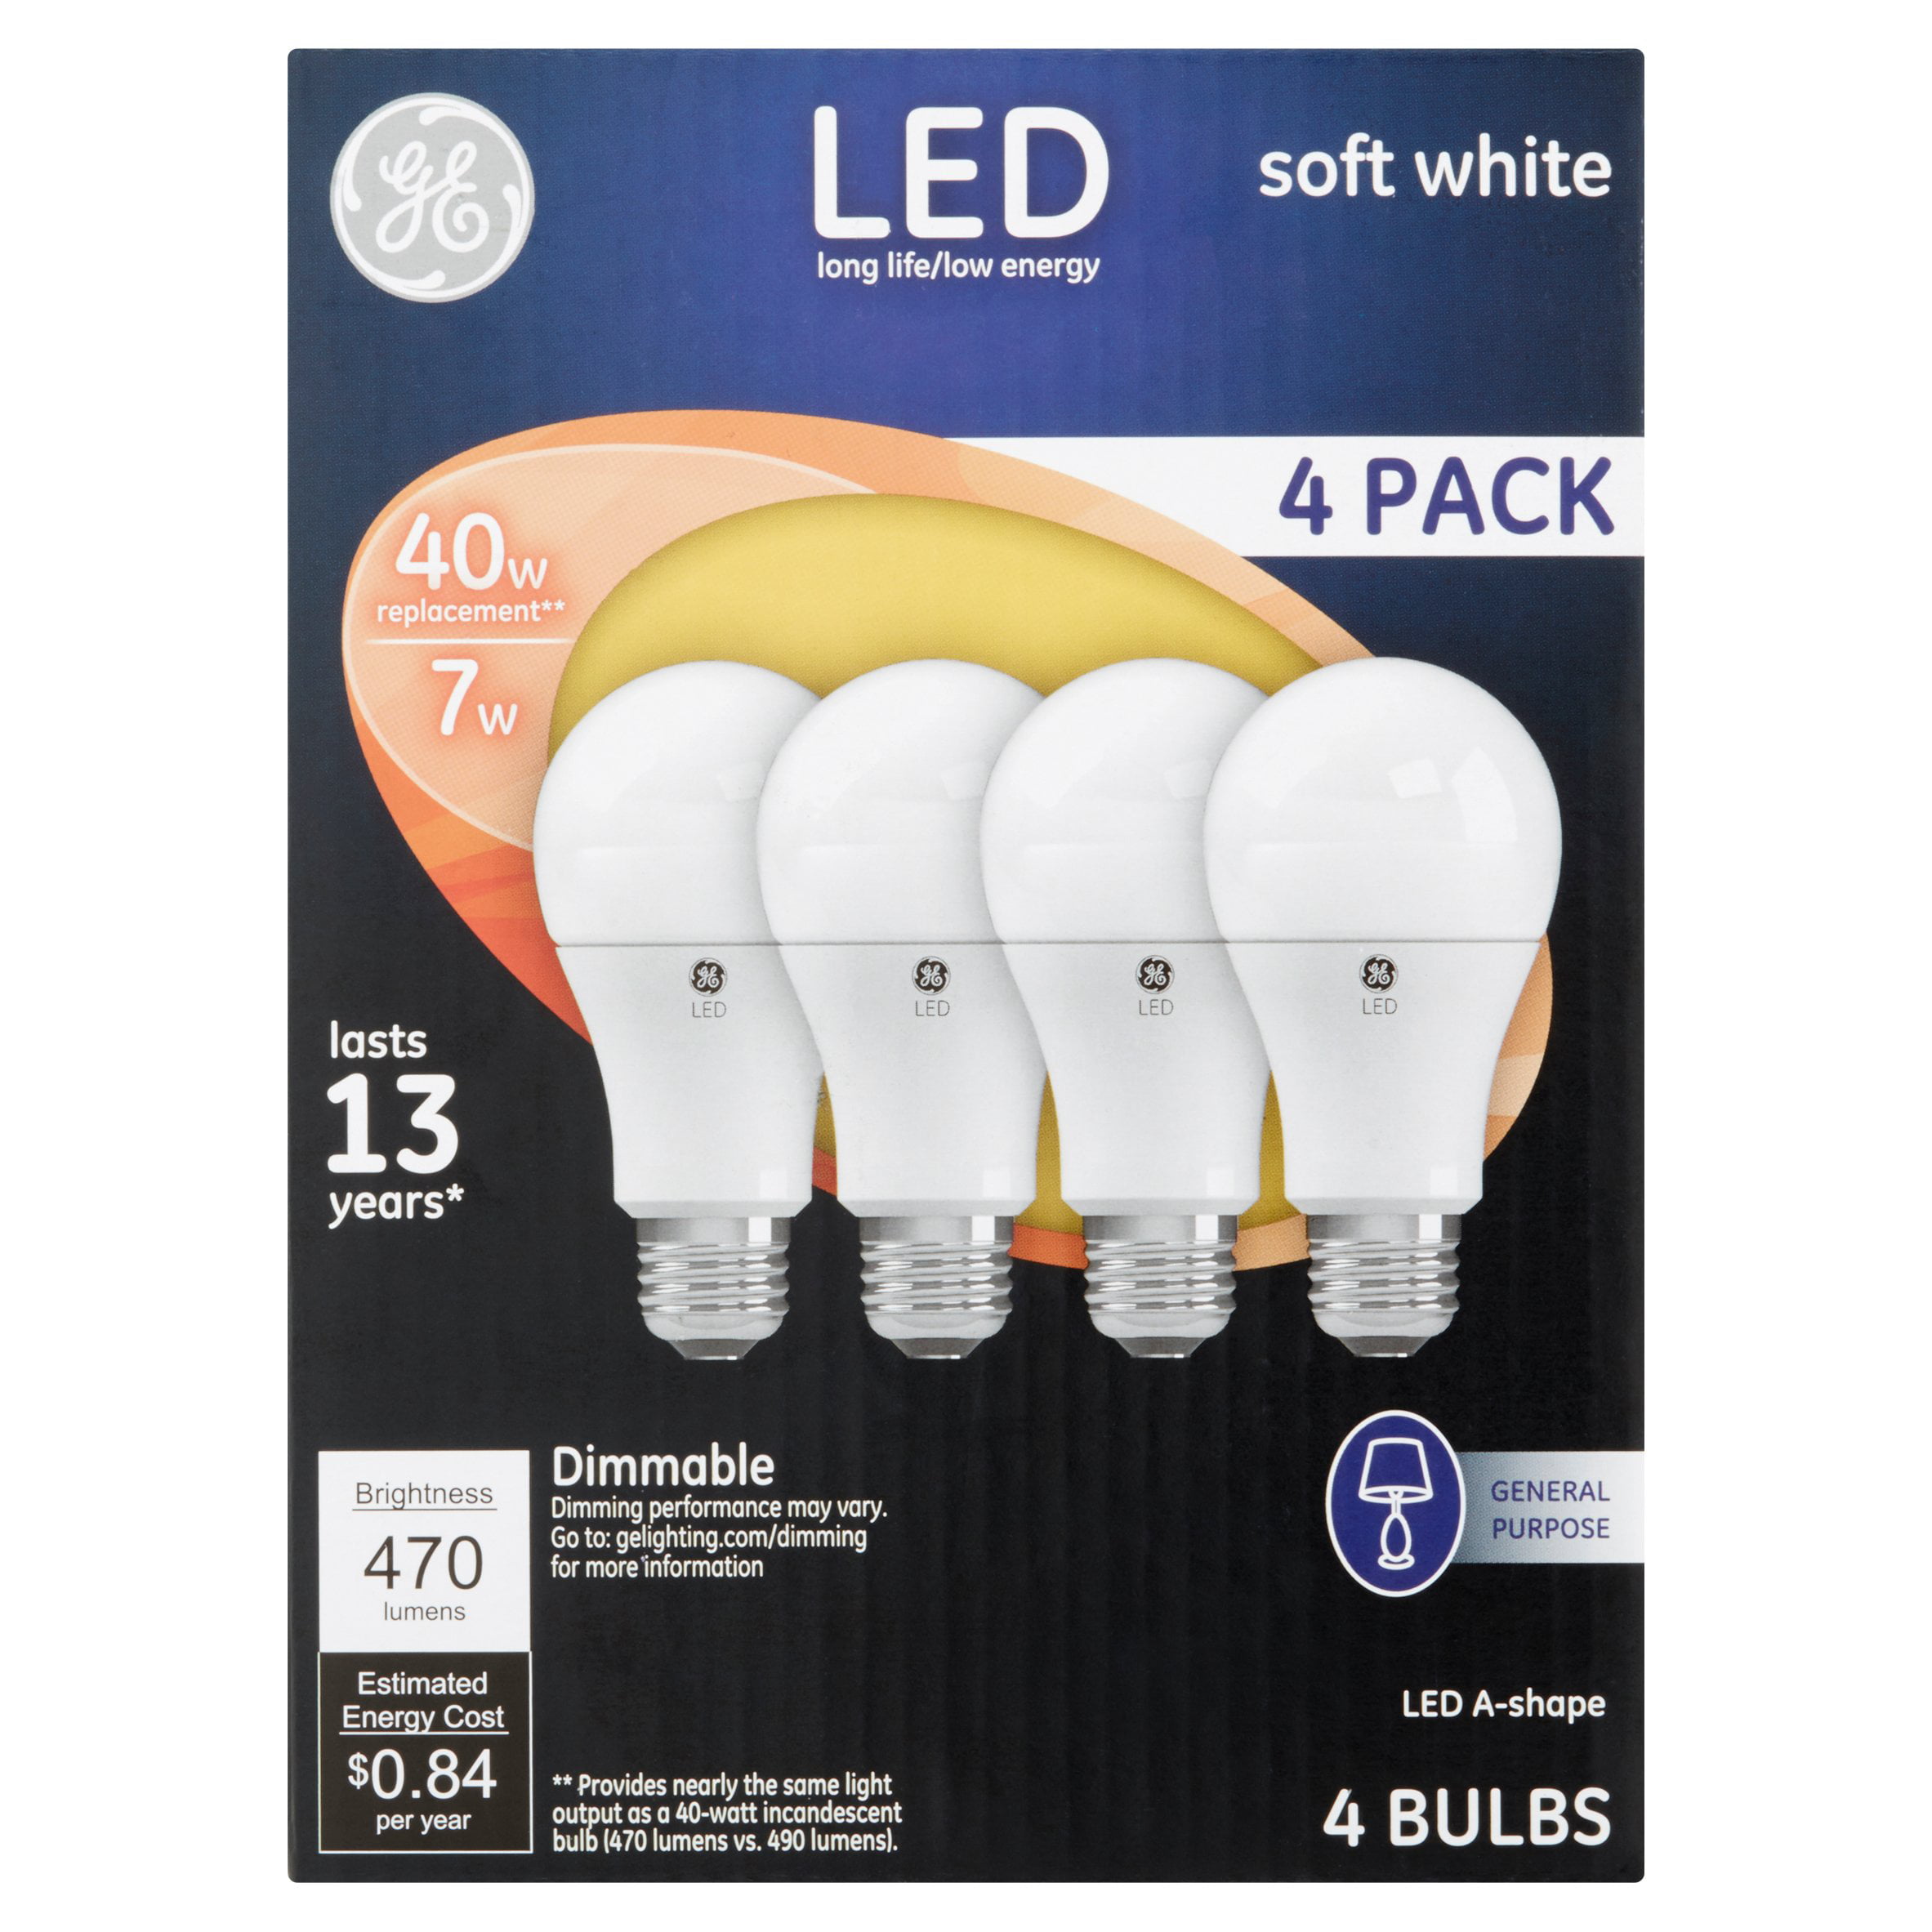 G E LIGHTING 96687 HD LED Light Bulbs 4-Pk Soft White - Quantity 1 10.5-Watt 800 Lumens